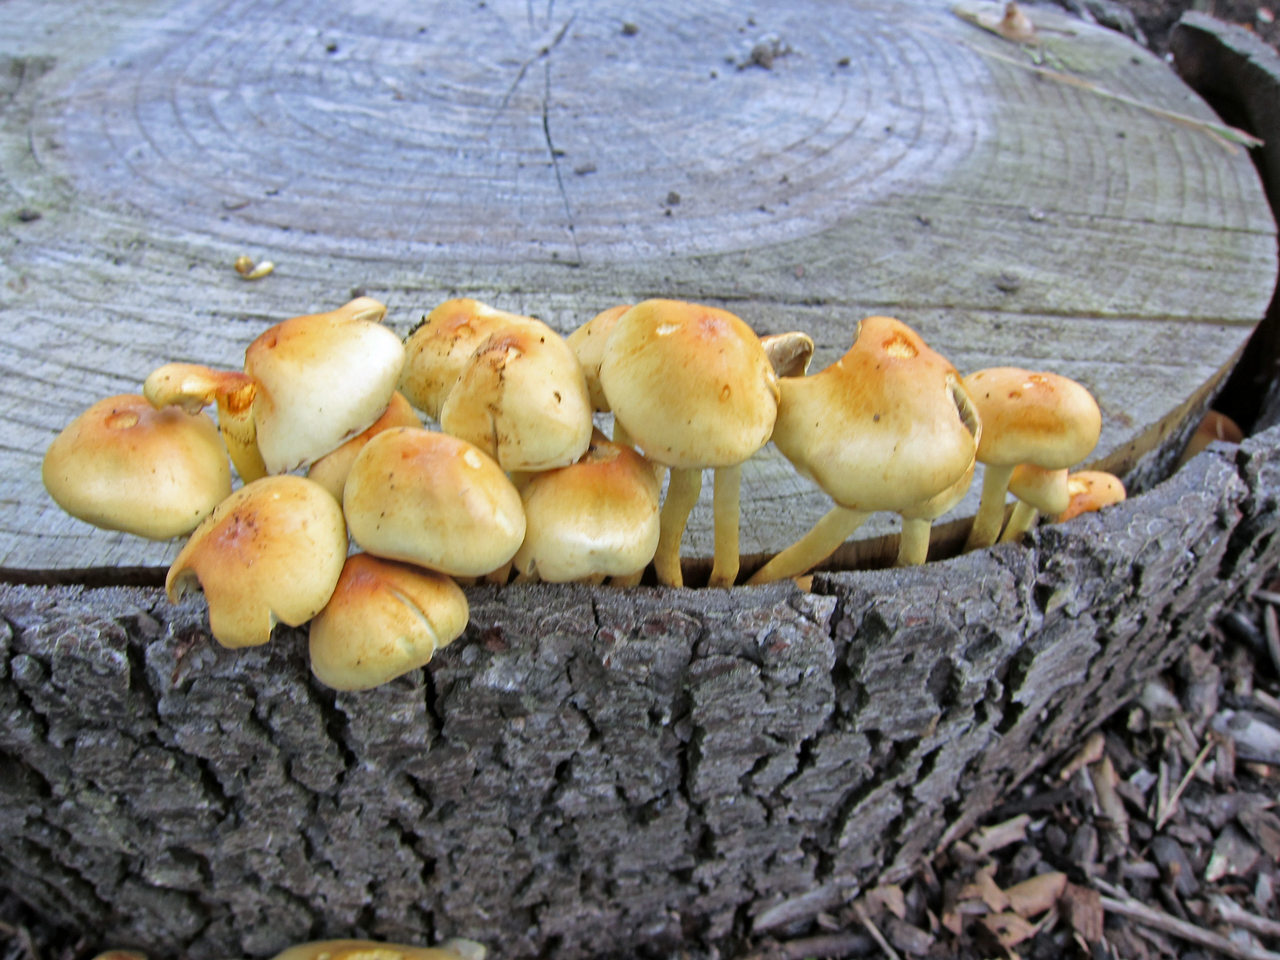 Autumn fungi at Woodlands Farm